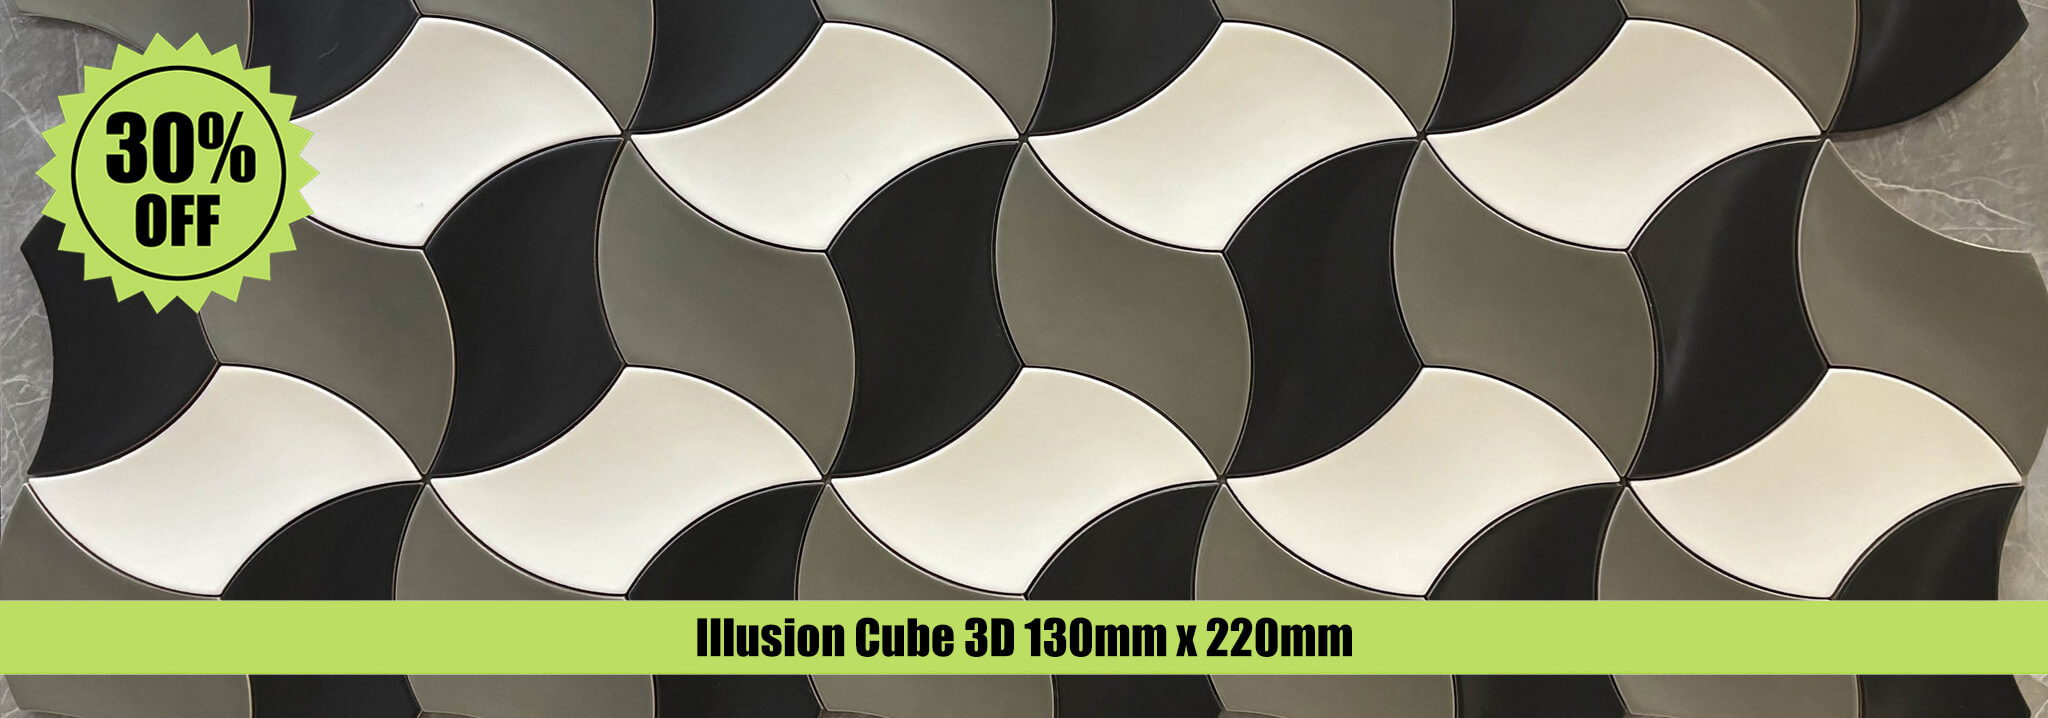 Illusion 3D Cube